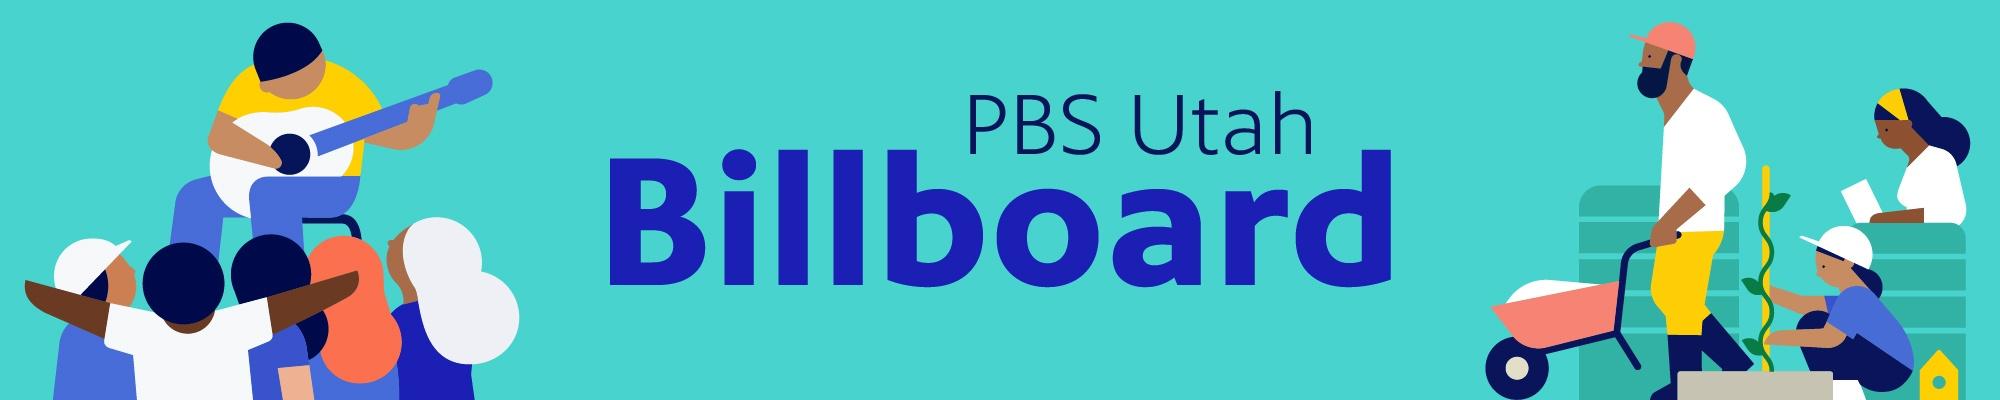 PBS Utah Community Billboard